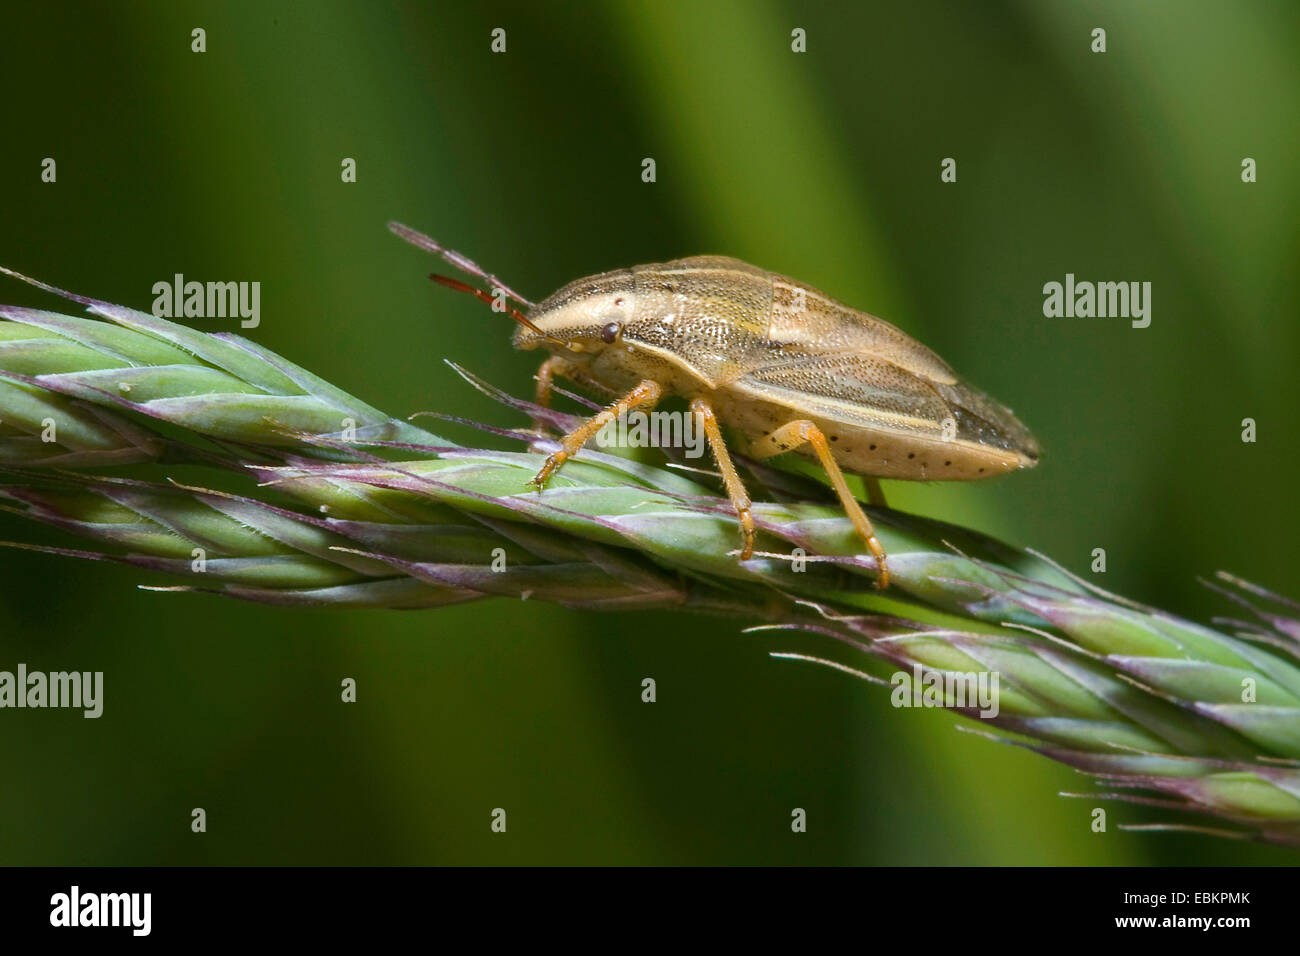 Bishop's mitre, Bishop's mitre bug (Aelia acuminata), sitting on a grass ear, Germany Stock Photo